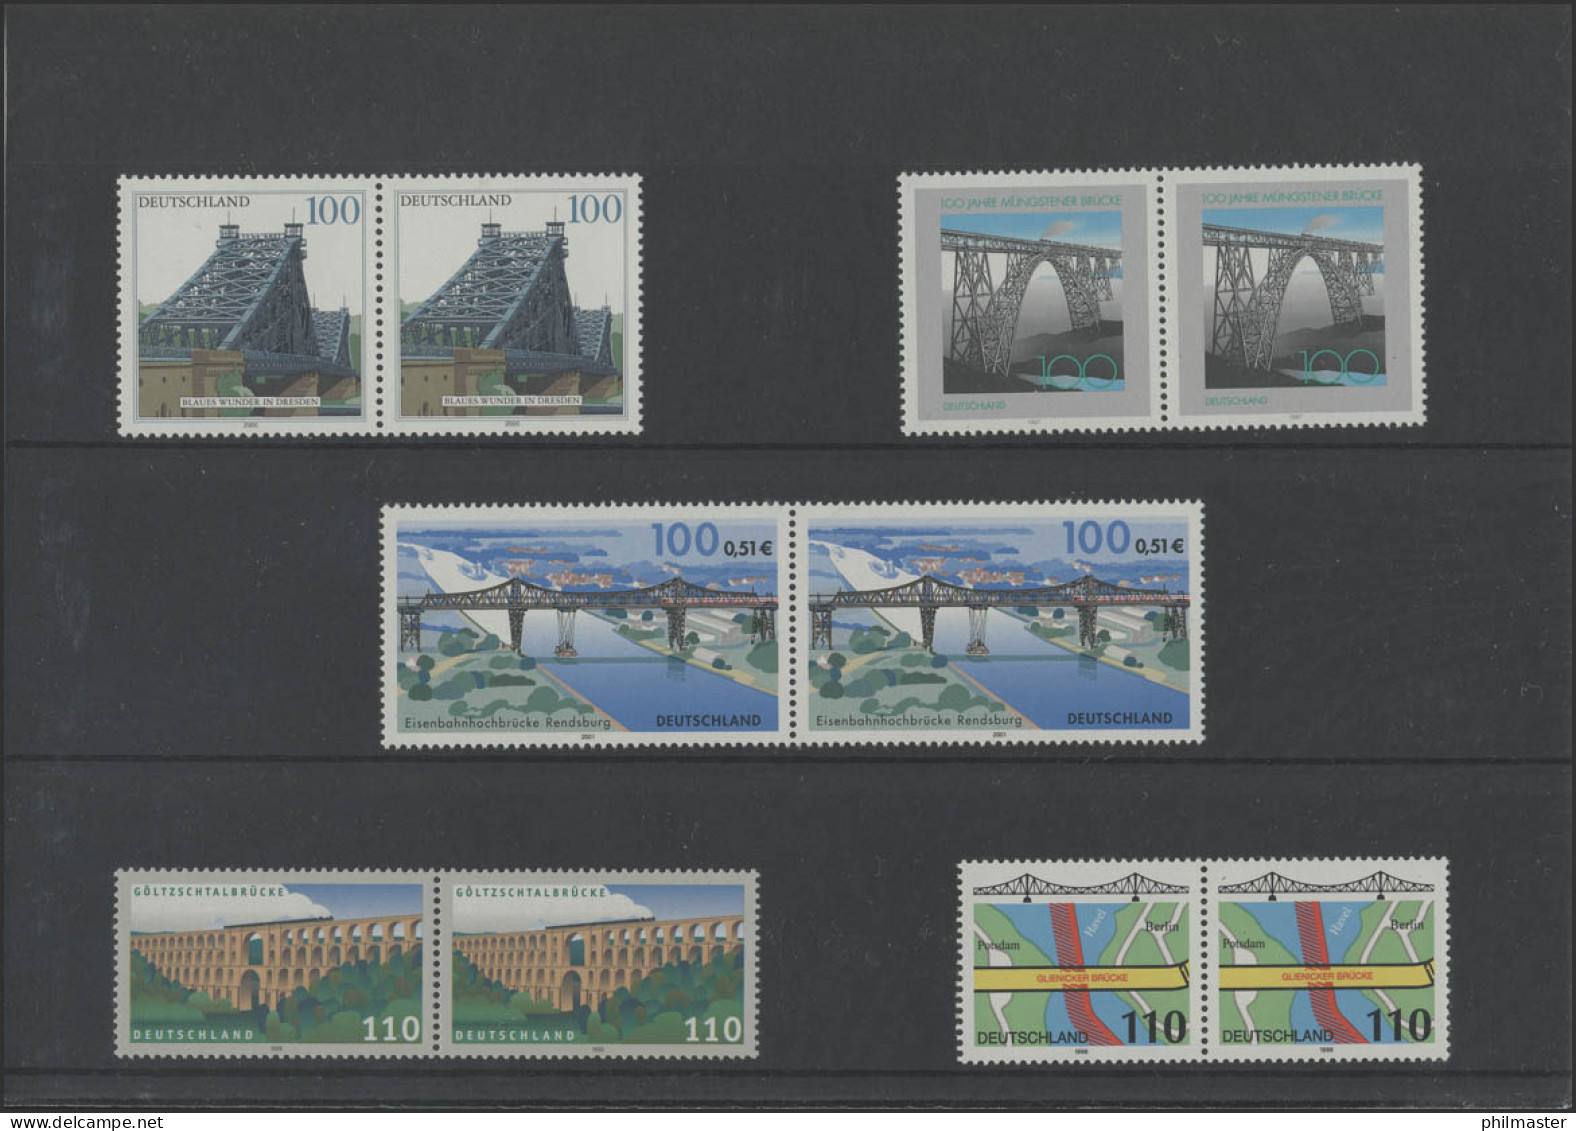 Bezaubernde Briefmarken: Brücken 1, Postfrisch **  - Autres & Non Classés